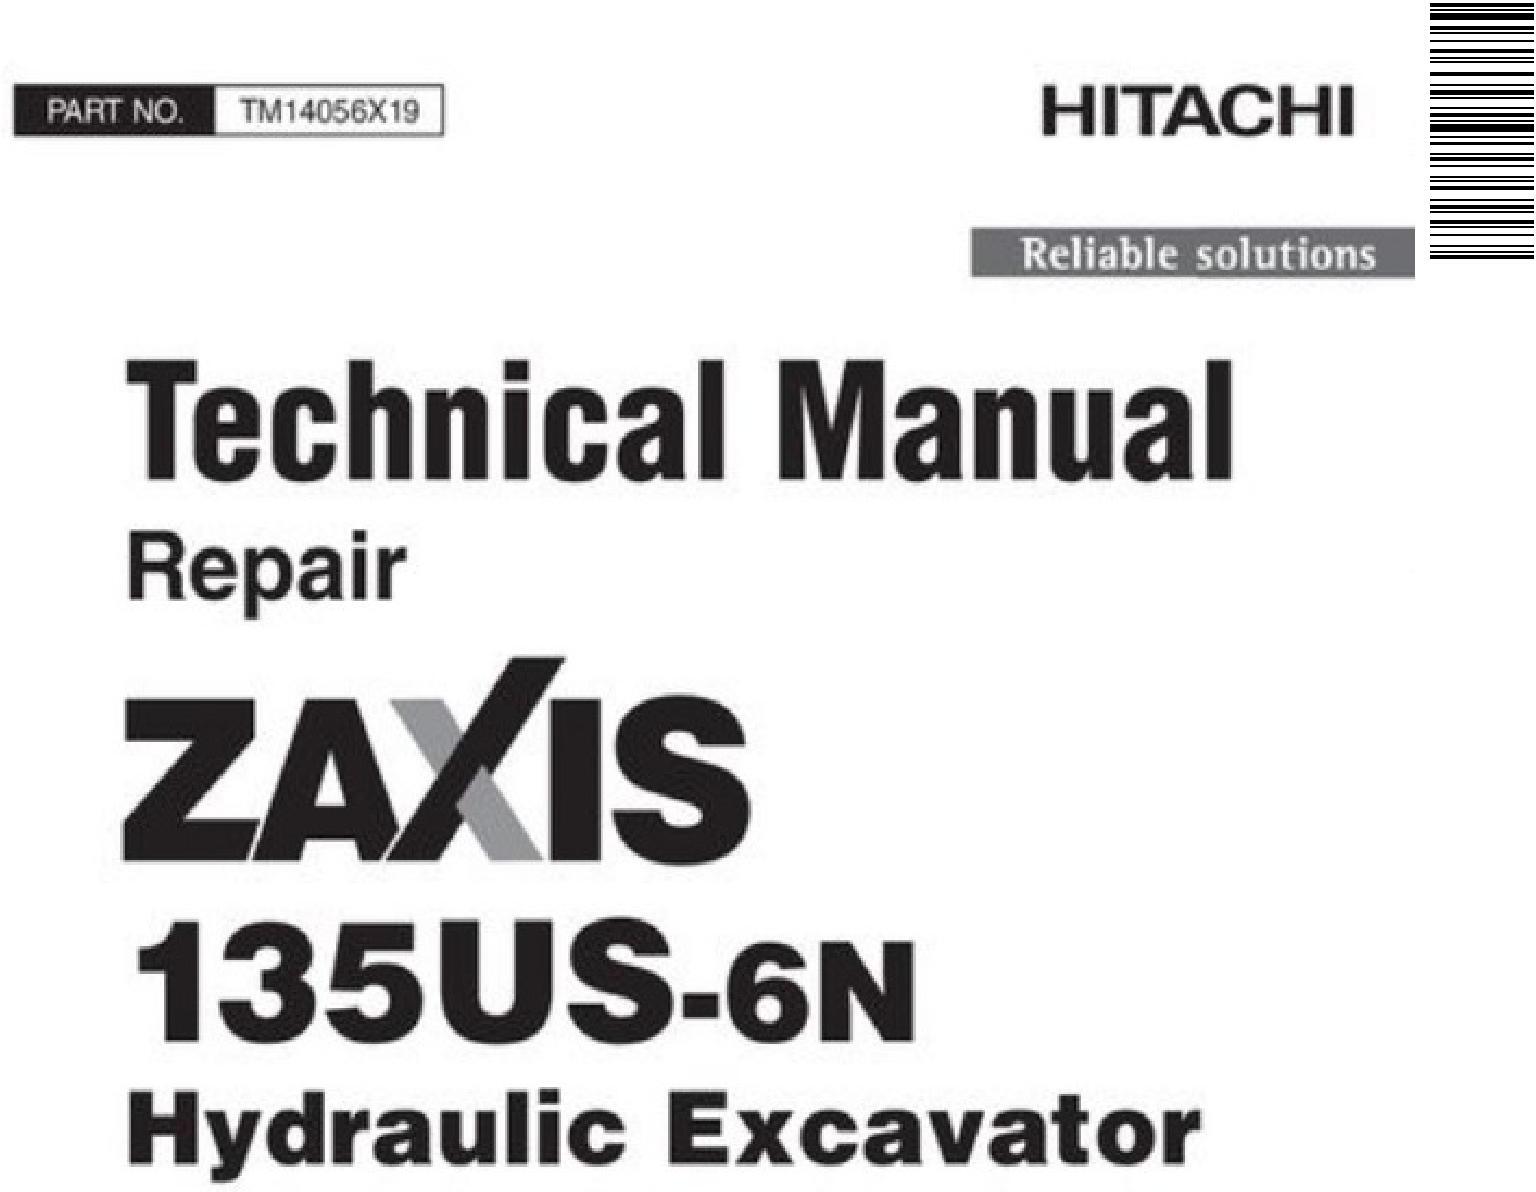 Hitachi Zaxis 135US-6N Excavator Service Repair Technical Manual (TM14056X19)